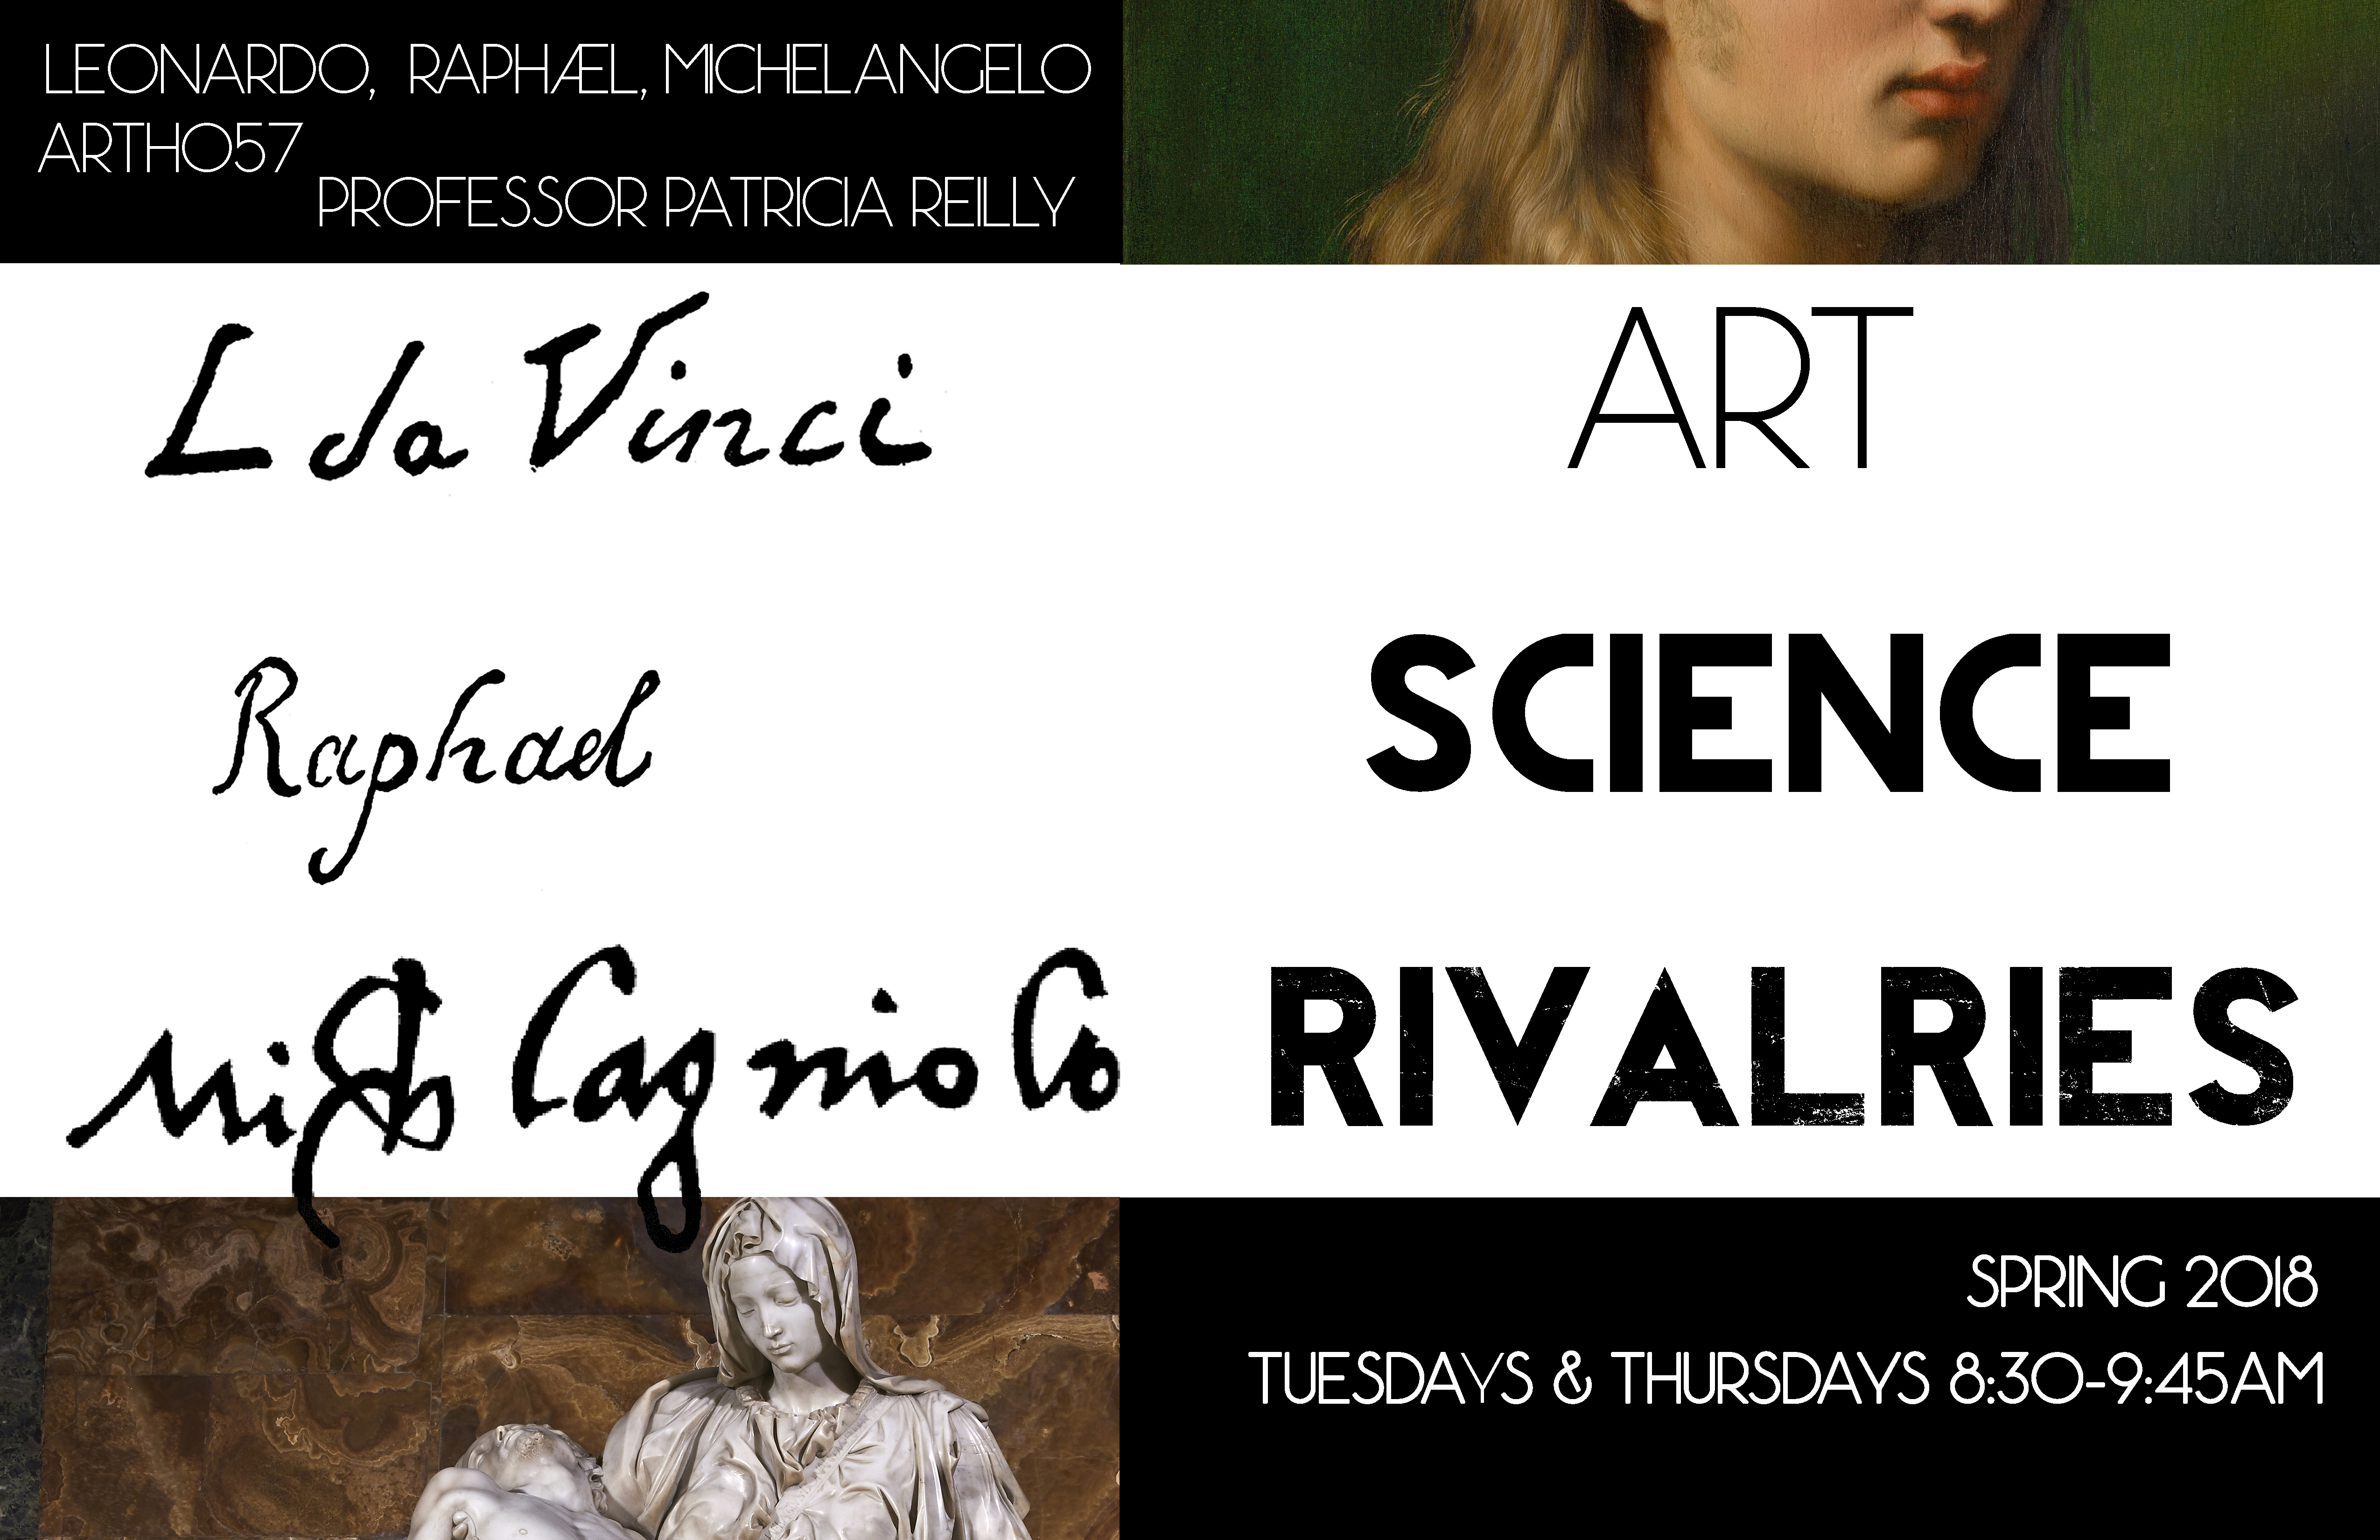 Art History Courses :: Art & Art History :: Swarthmore College